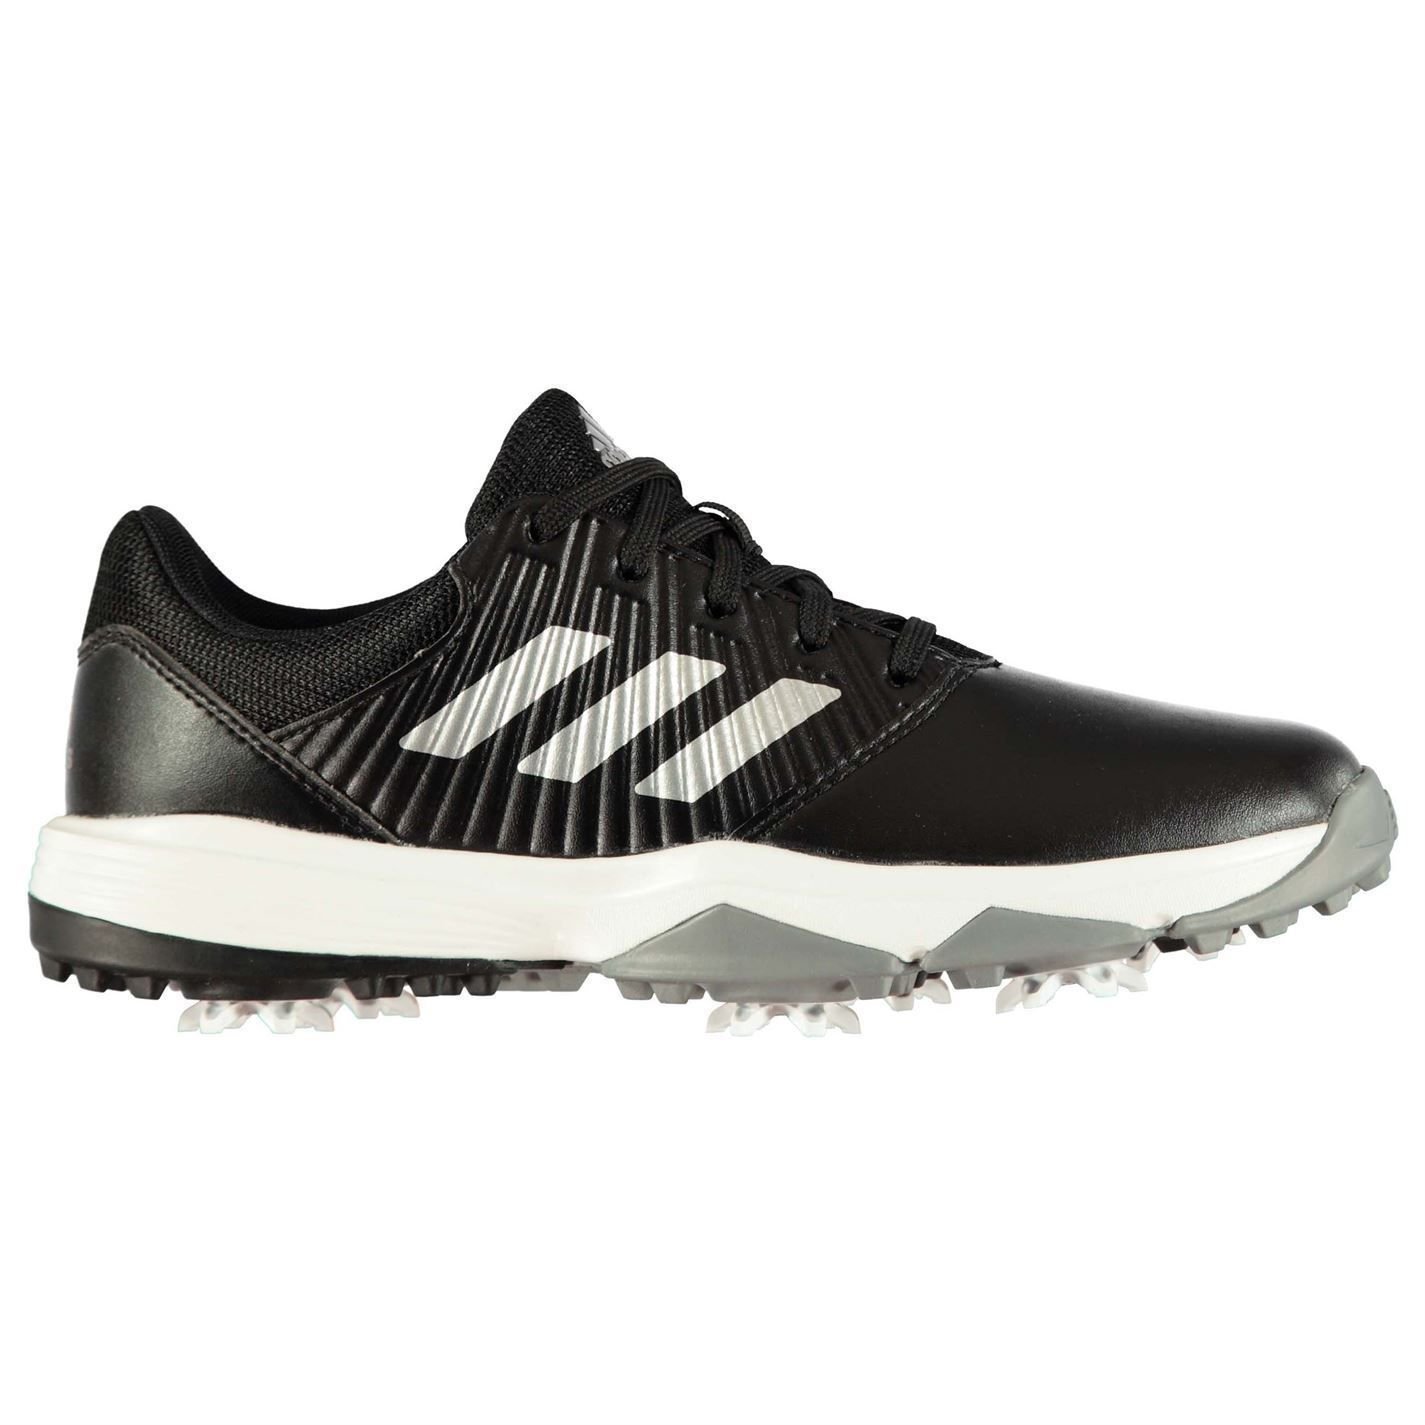 Junior buty golfowe Adidas CP Traxion Junior Buty Do Golfa Core Black/Silver Metal/White UK 2